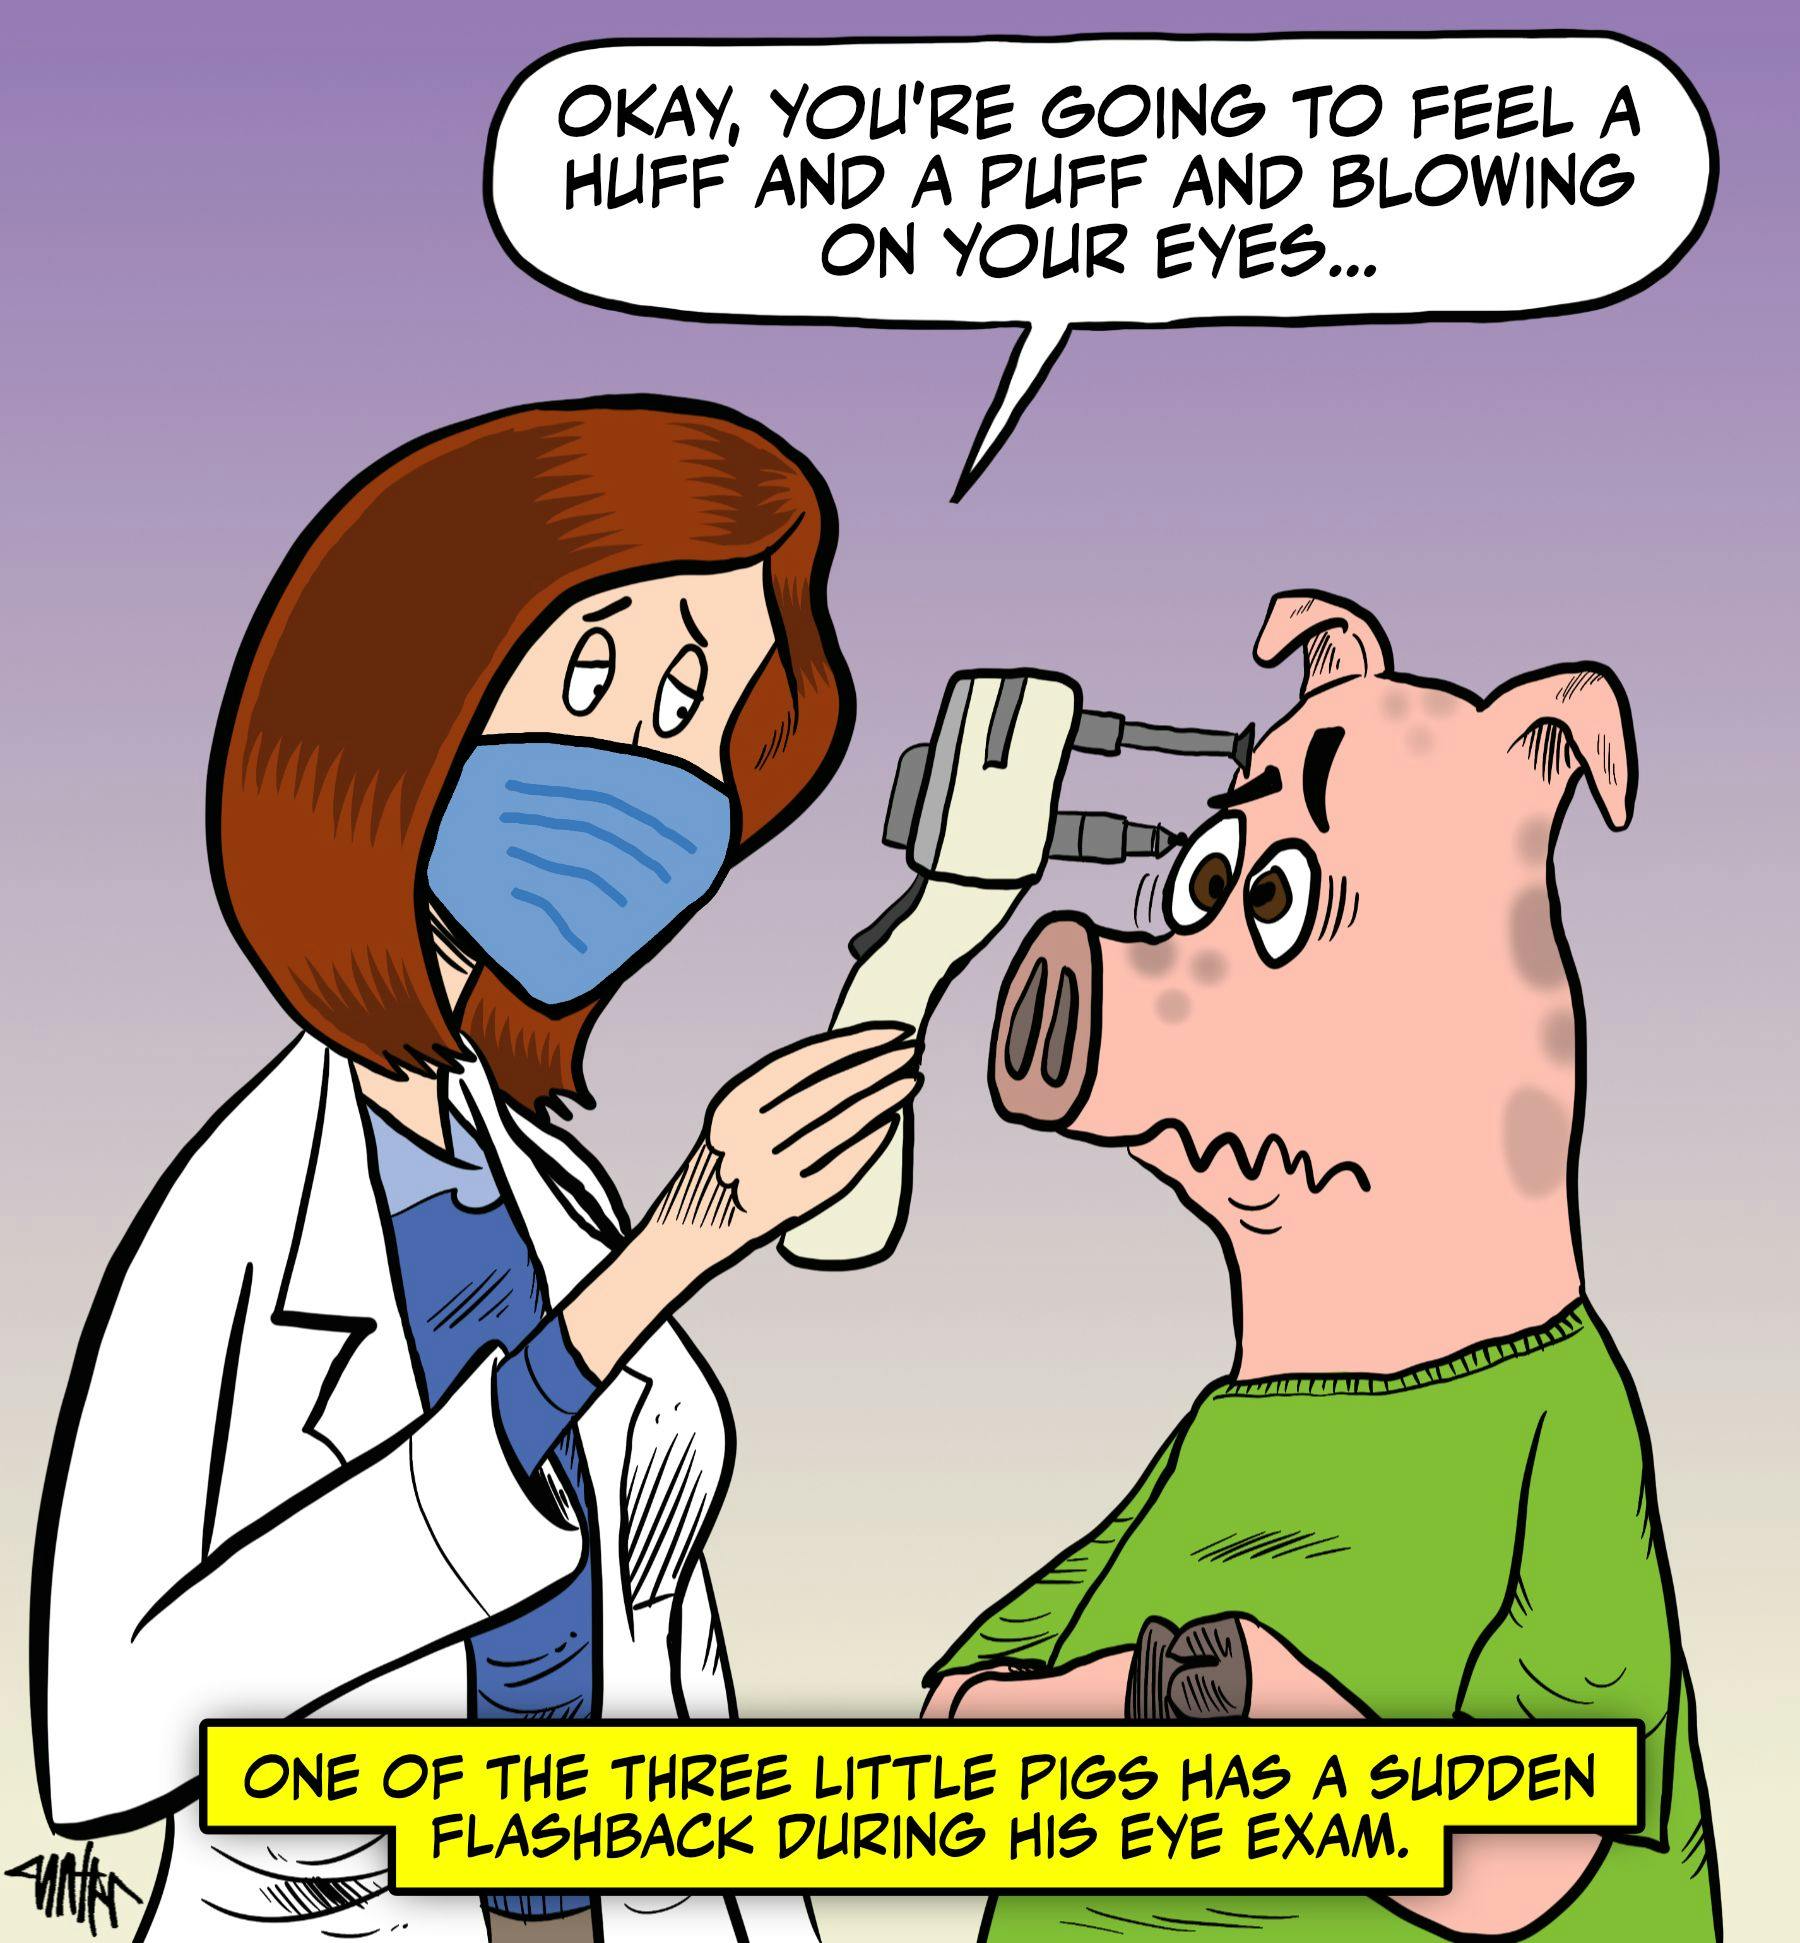 Optic relief: Piggie exam flashbacks